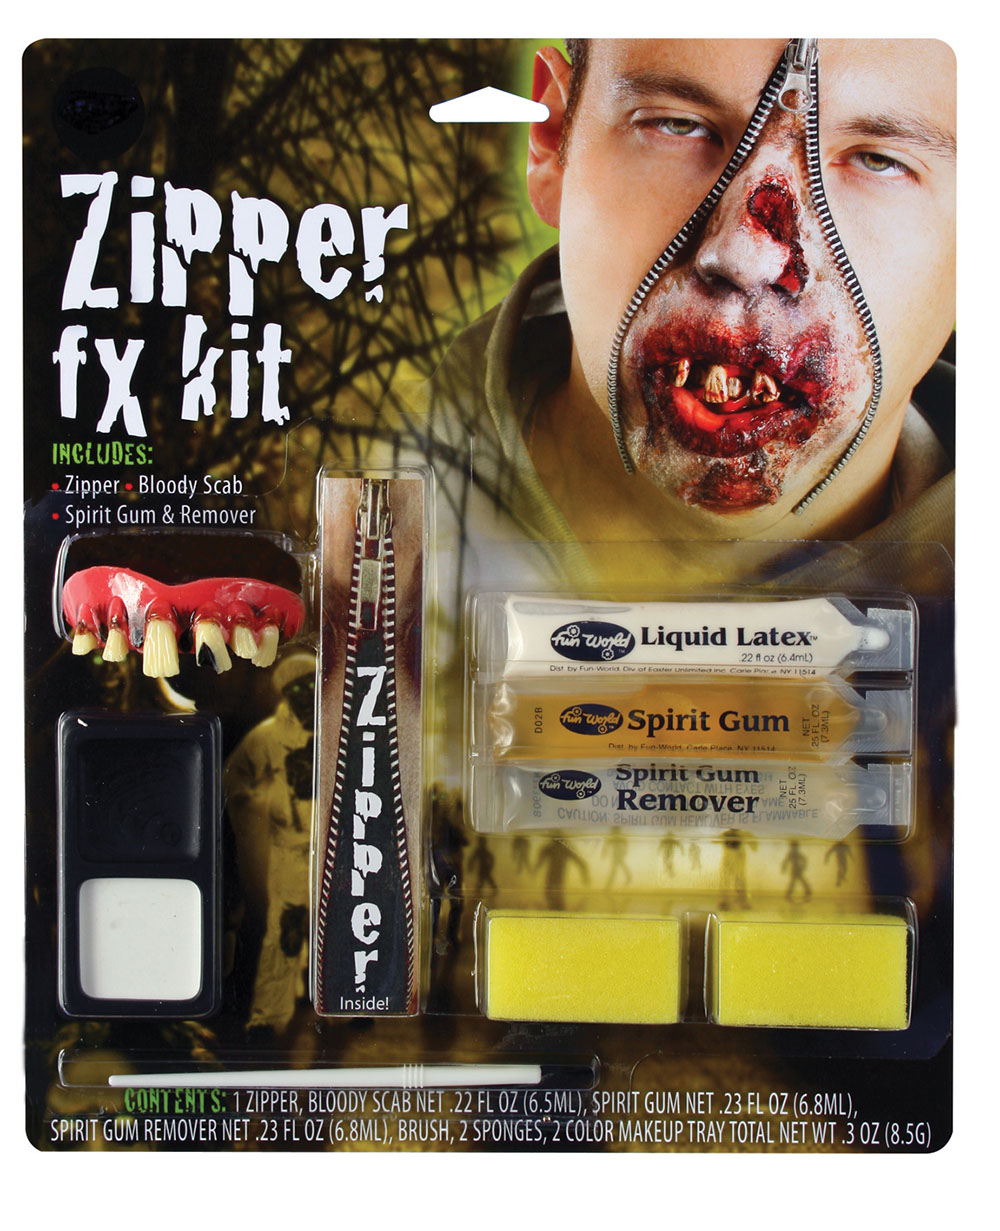 Zombie_zipper_kit_fx